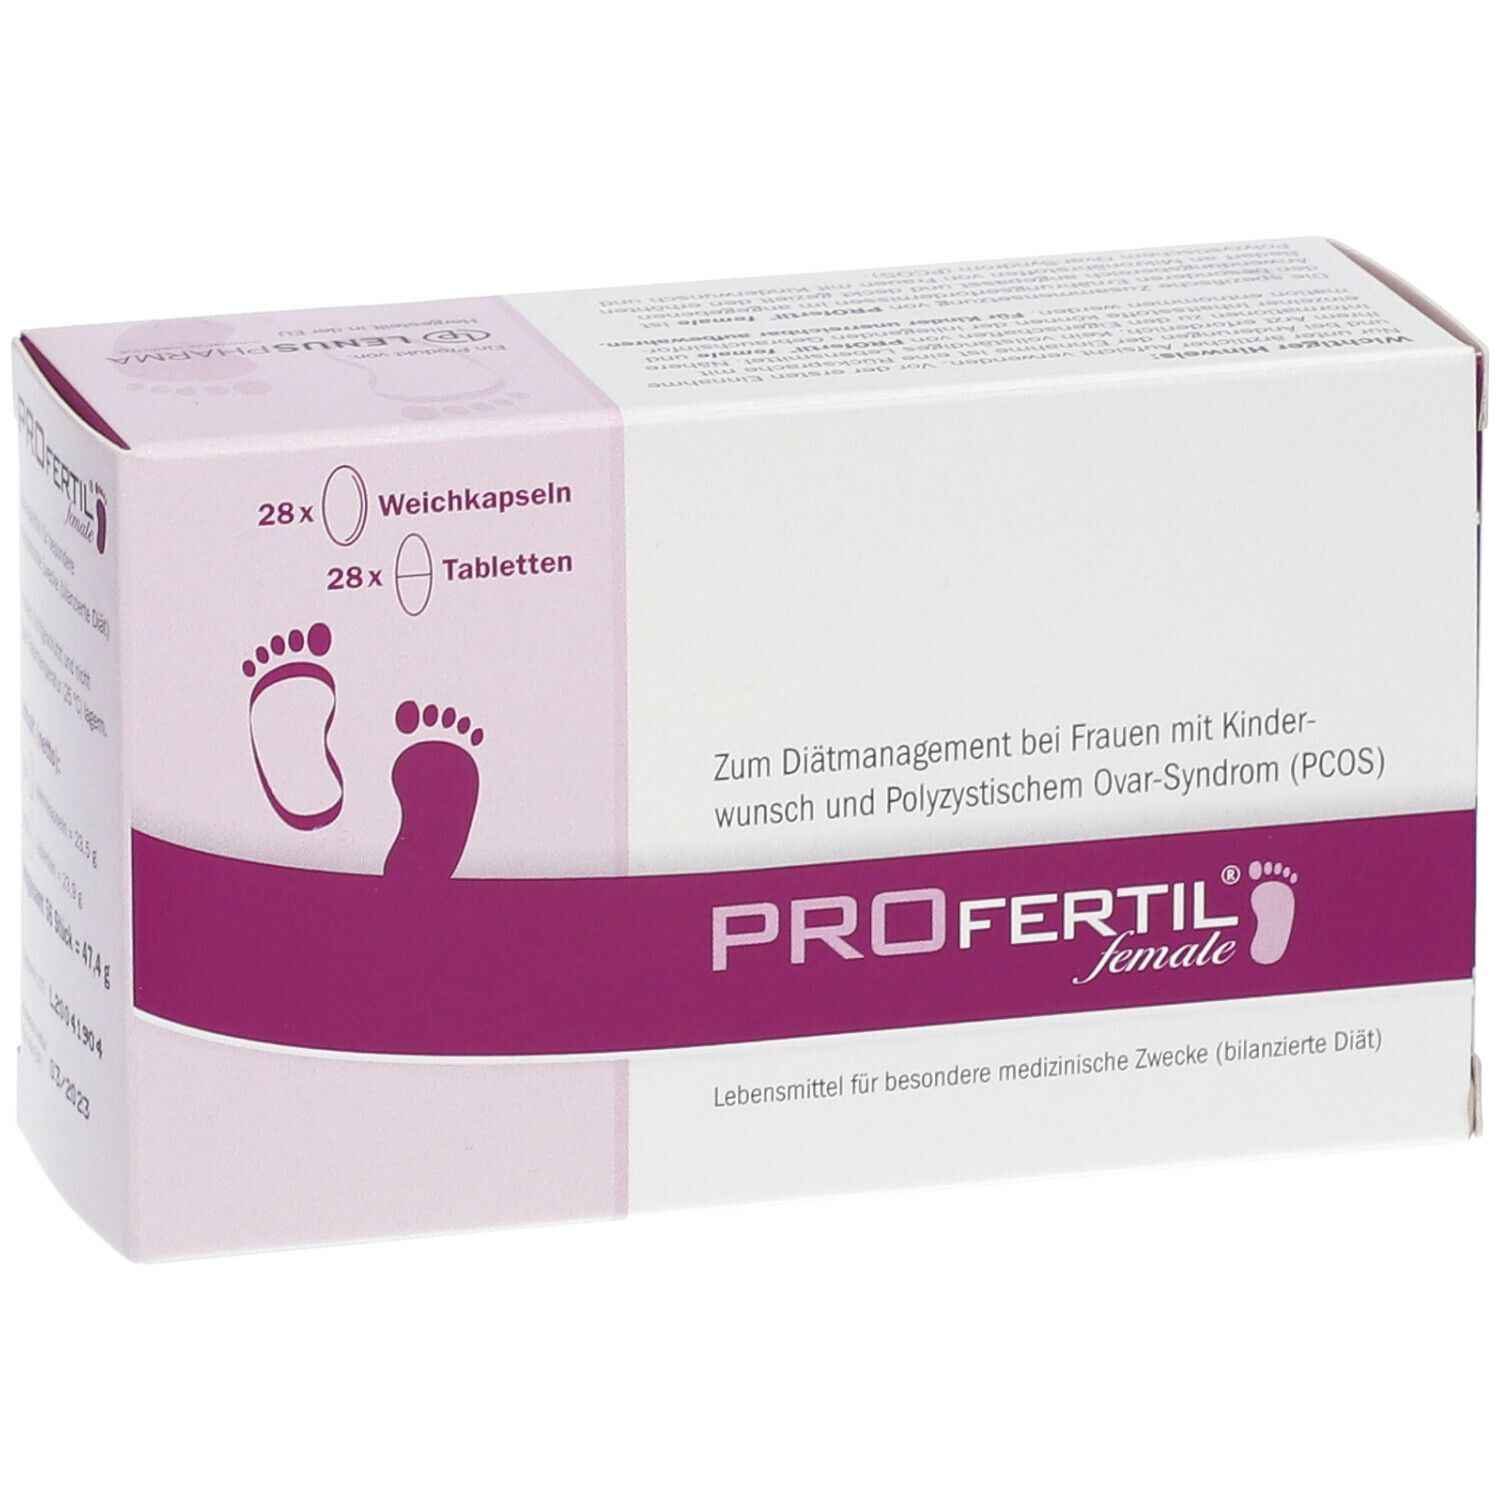 PROfertil® female Monatspackung